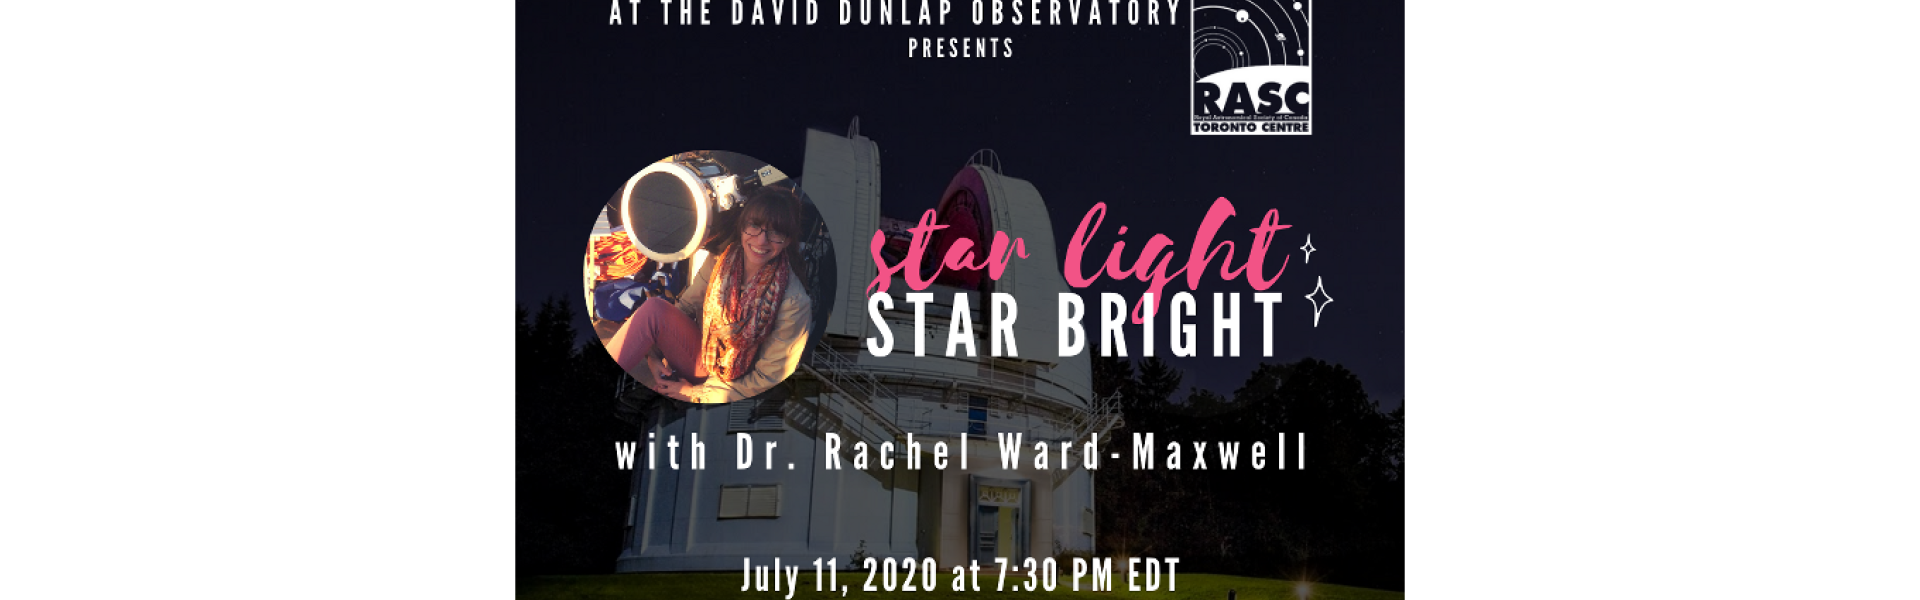 Star Light, Star Bright with Dr. Rachel Ward-Maxwell